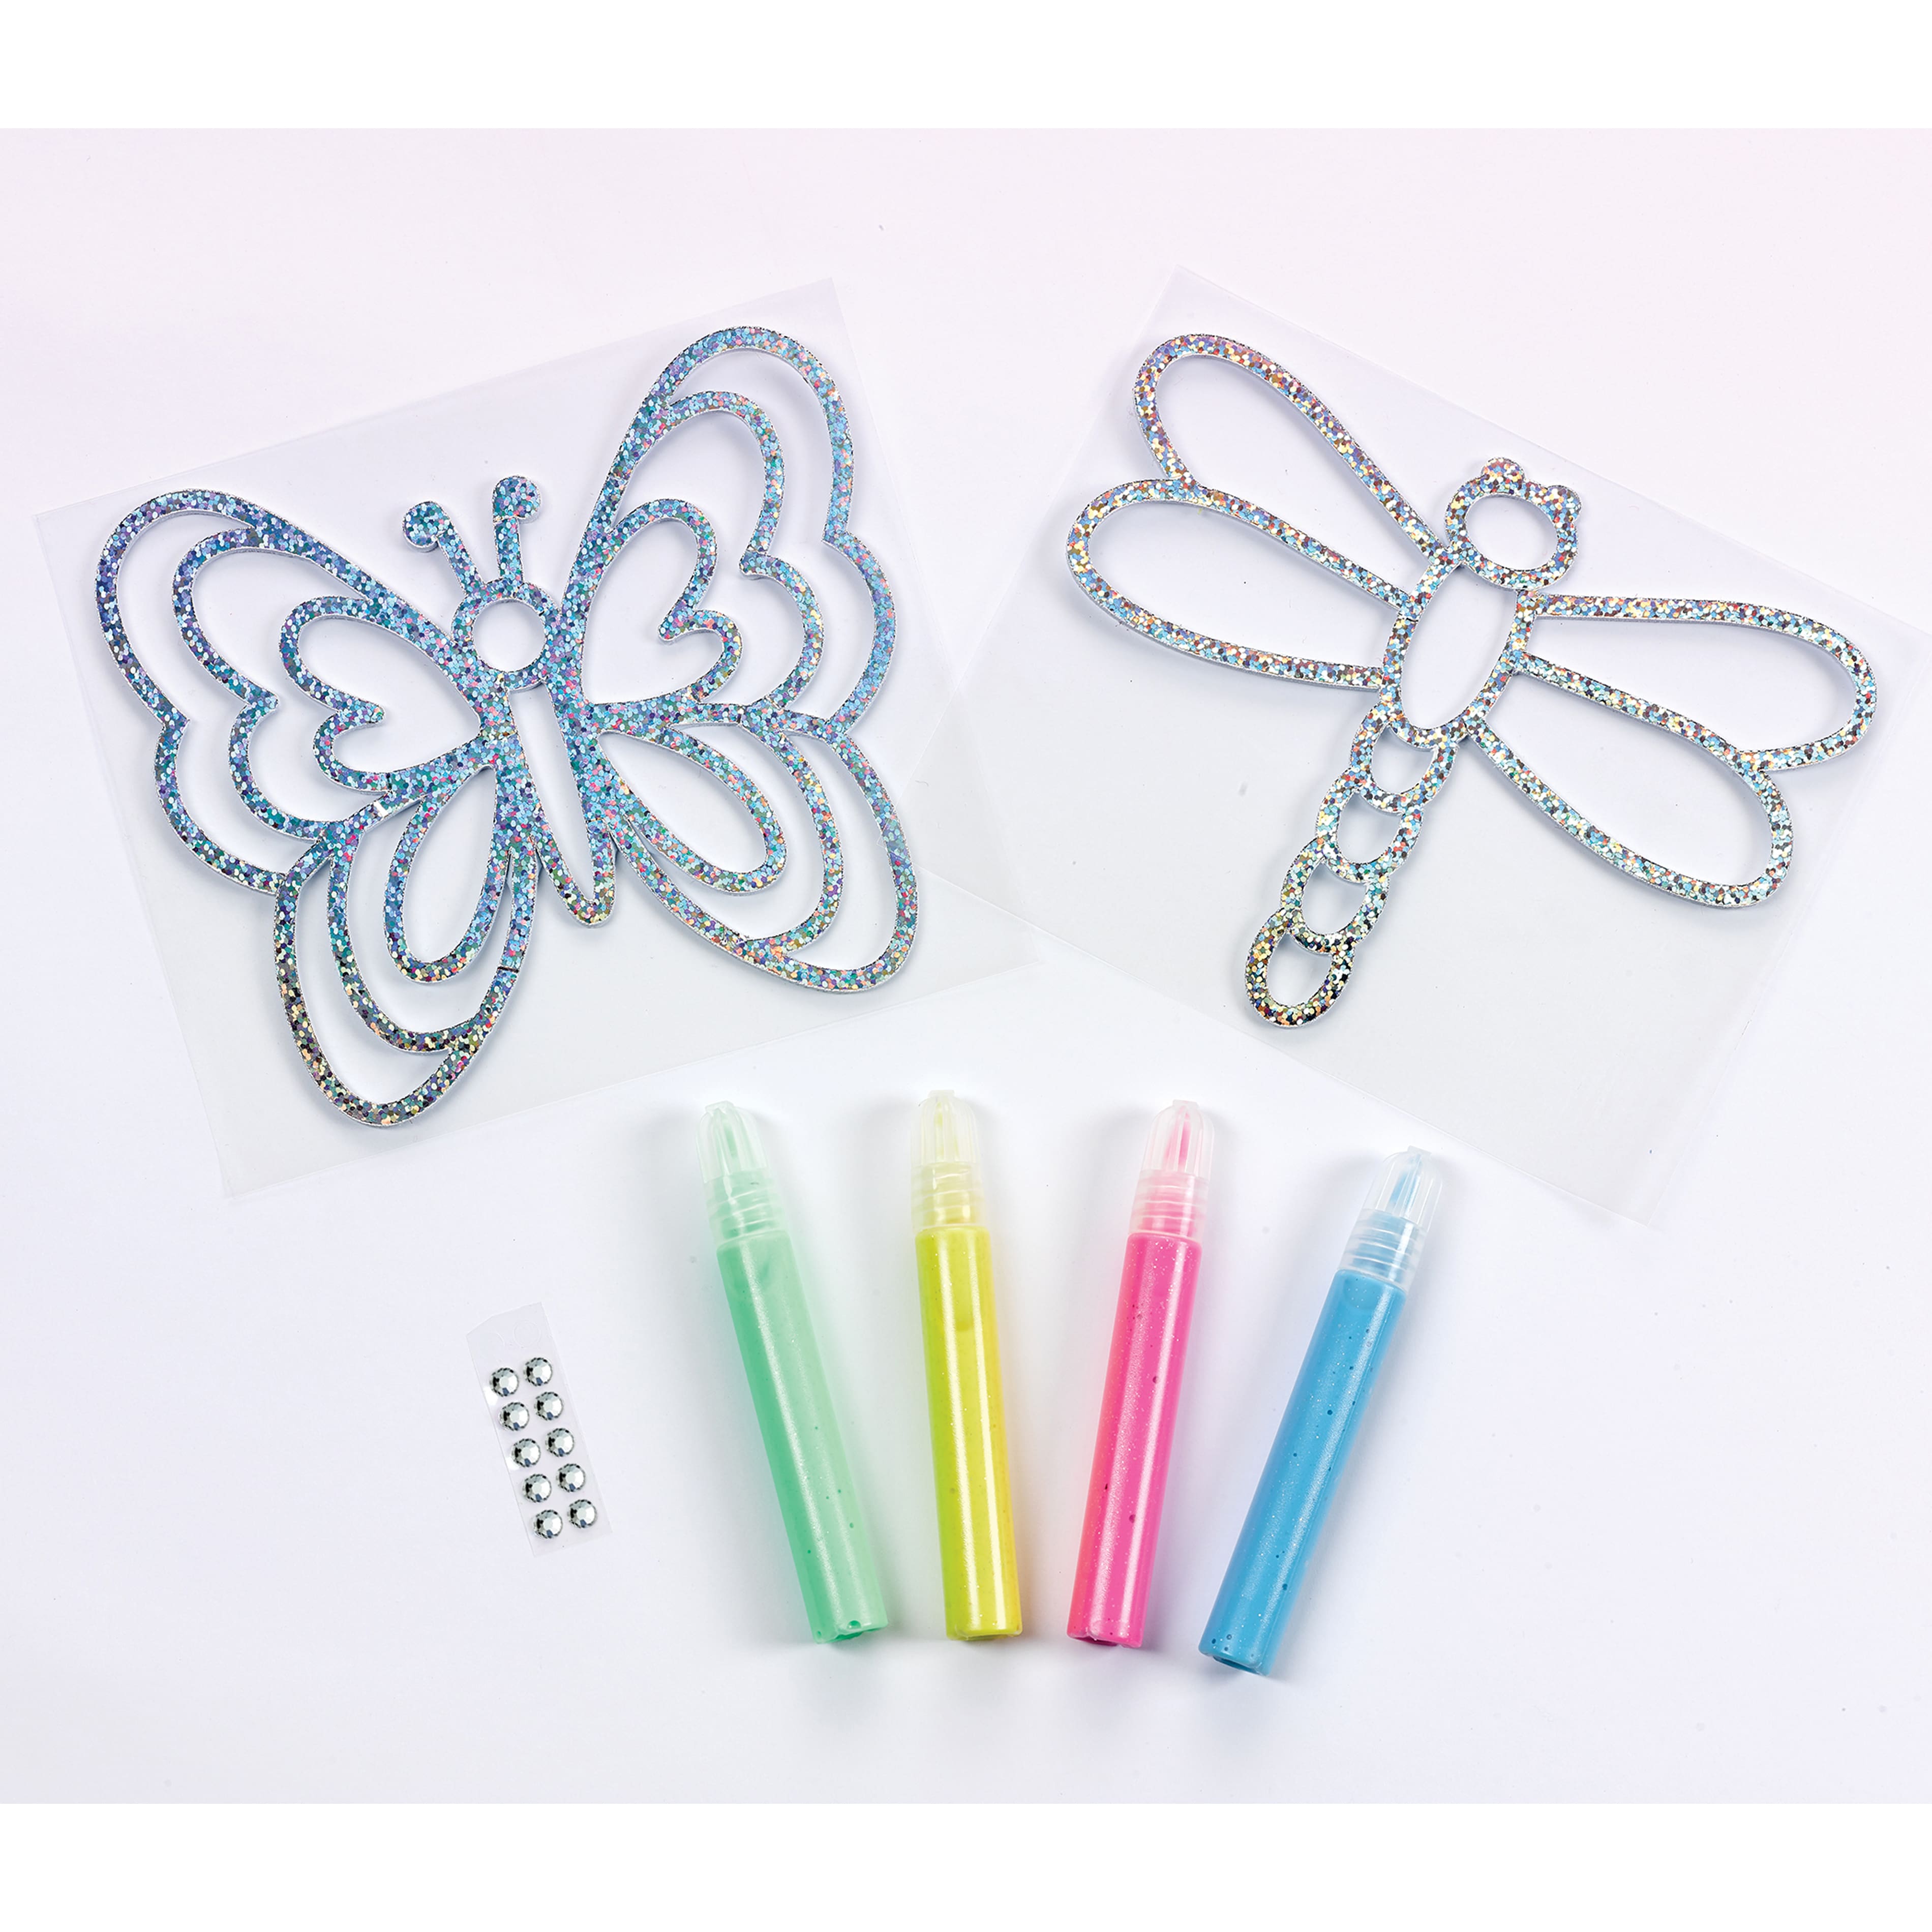 12 Pack: Creativity for Kids&#xAE; Bug Buddies Window Art Craft Kit